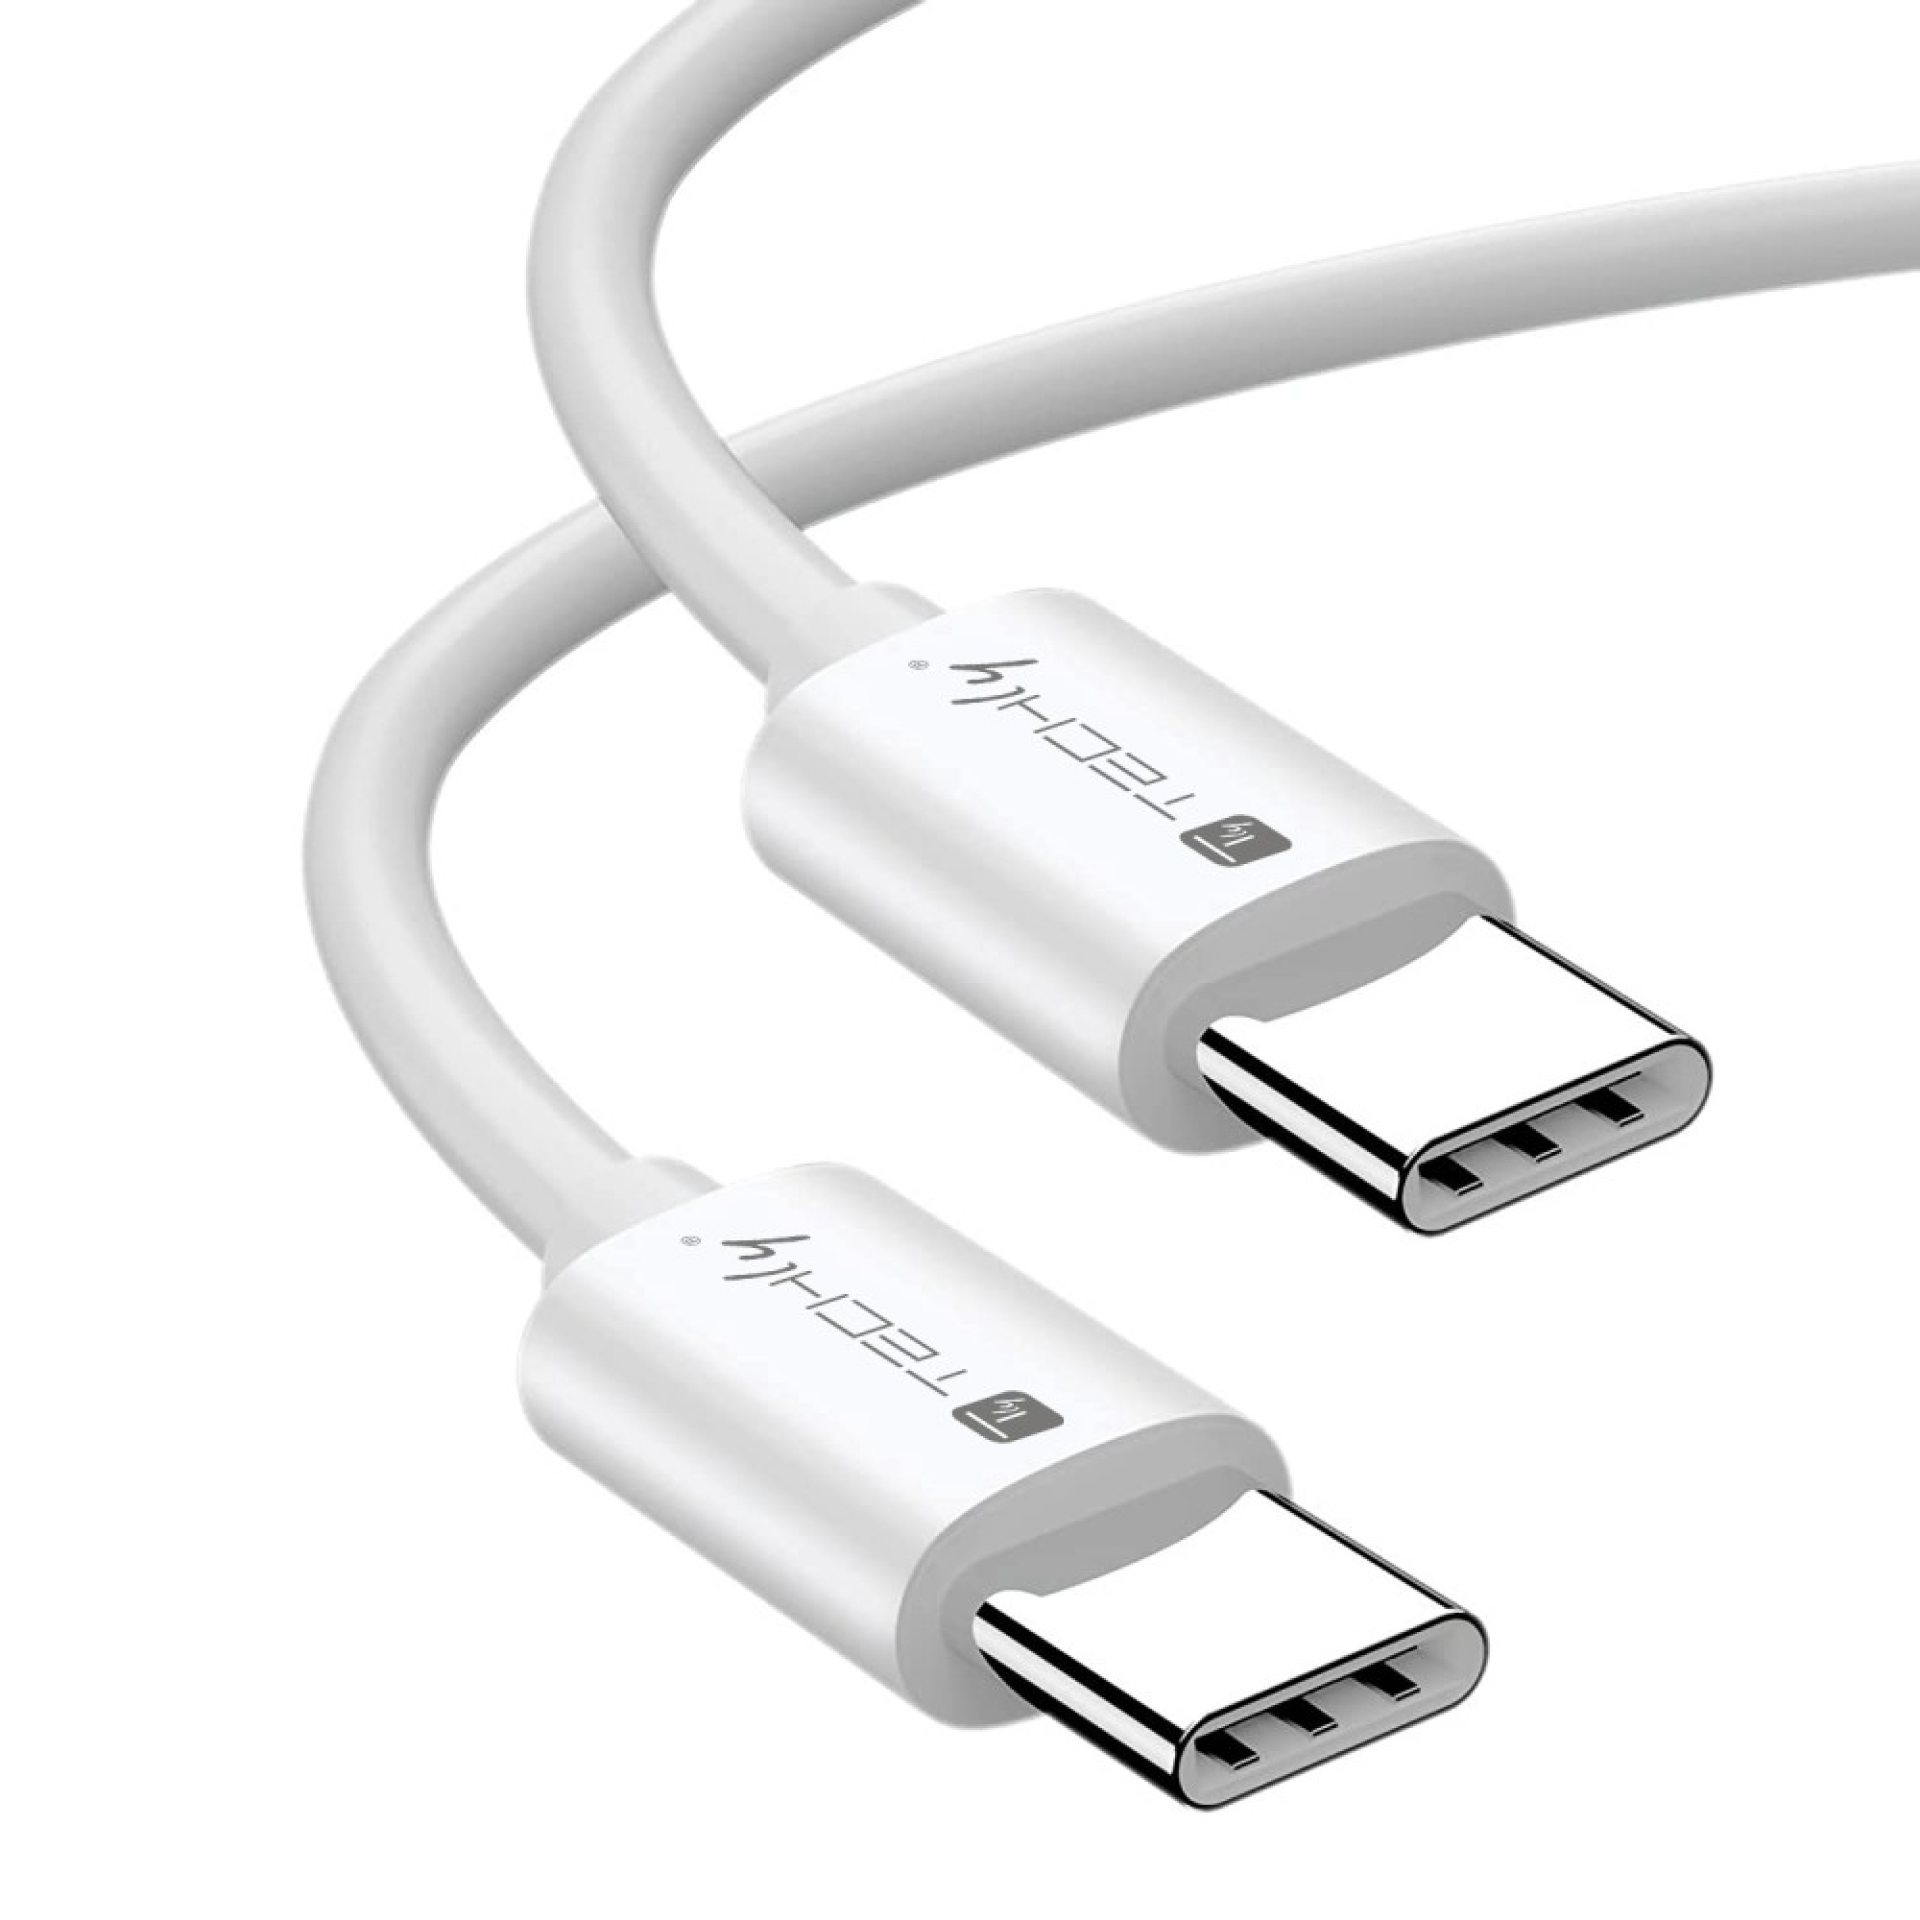 Techly USB4 Gen3 USB-C EPR cable 40G 240W 8K certified 1m white